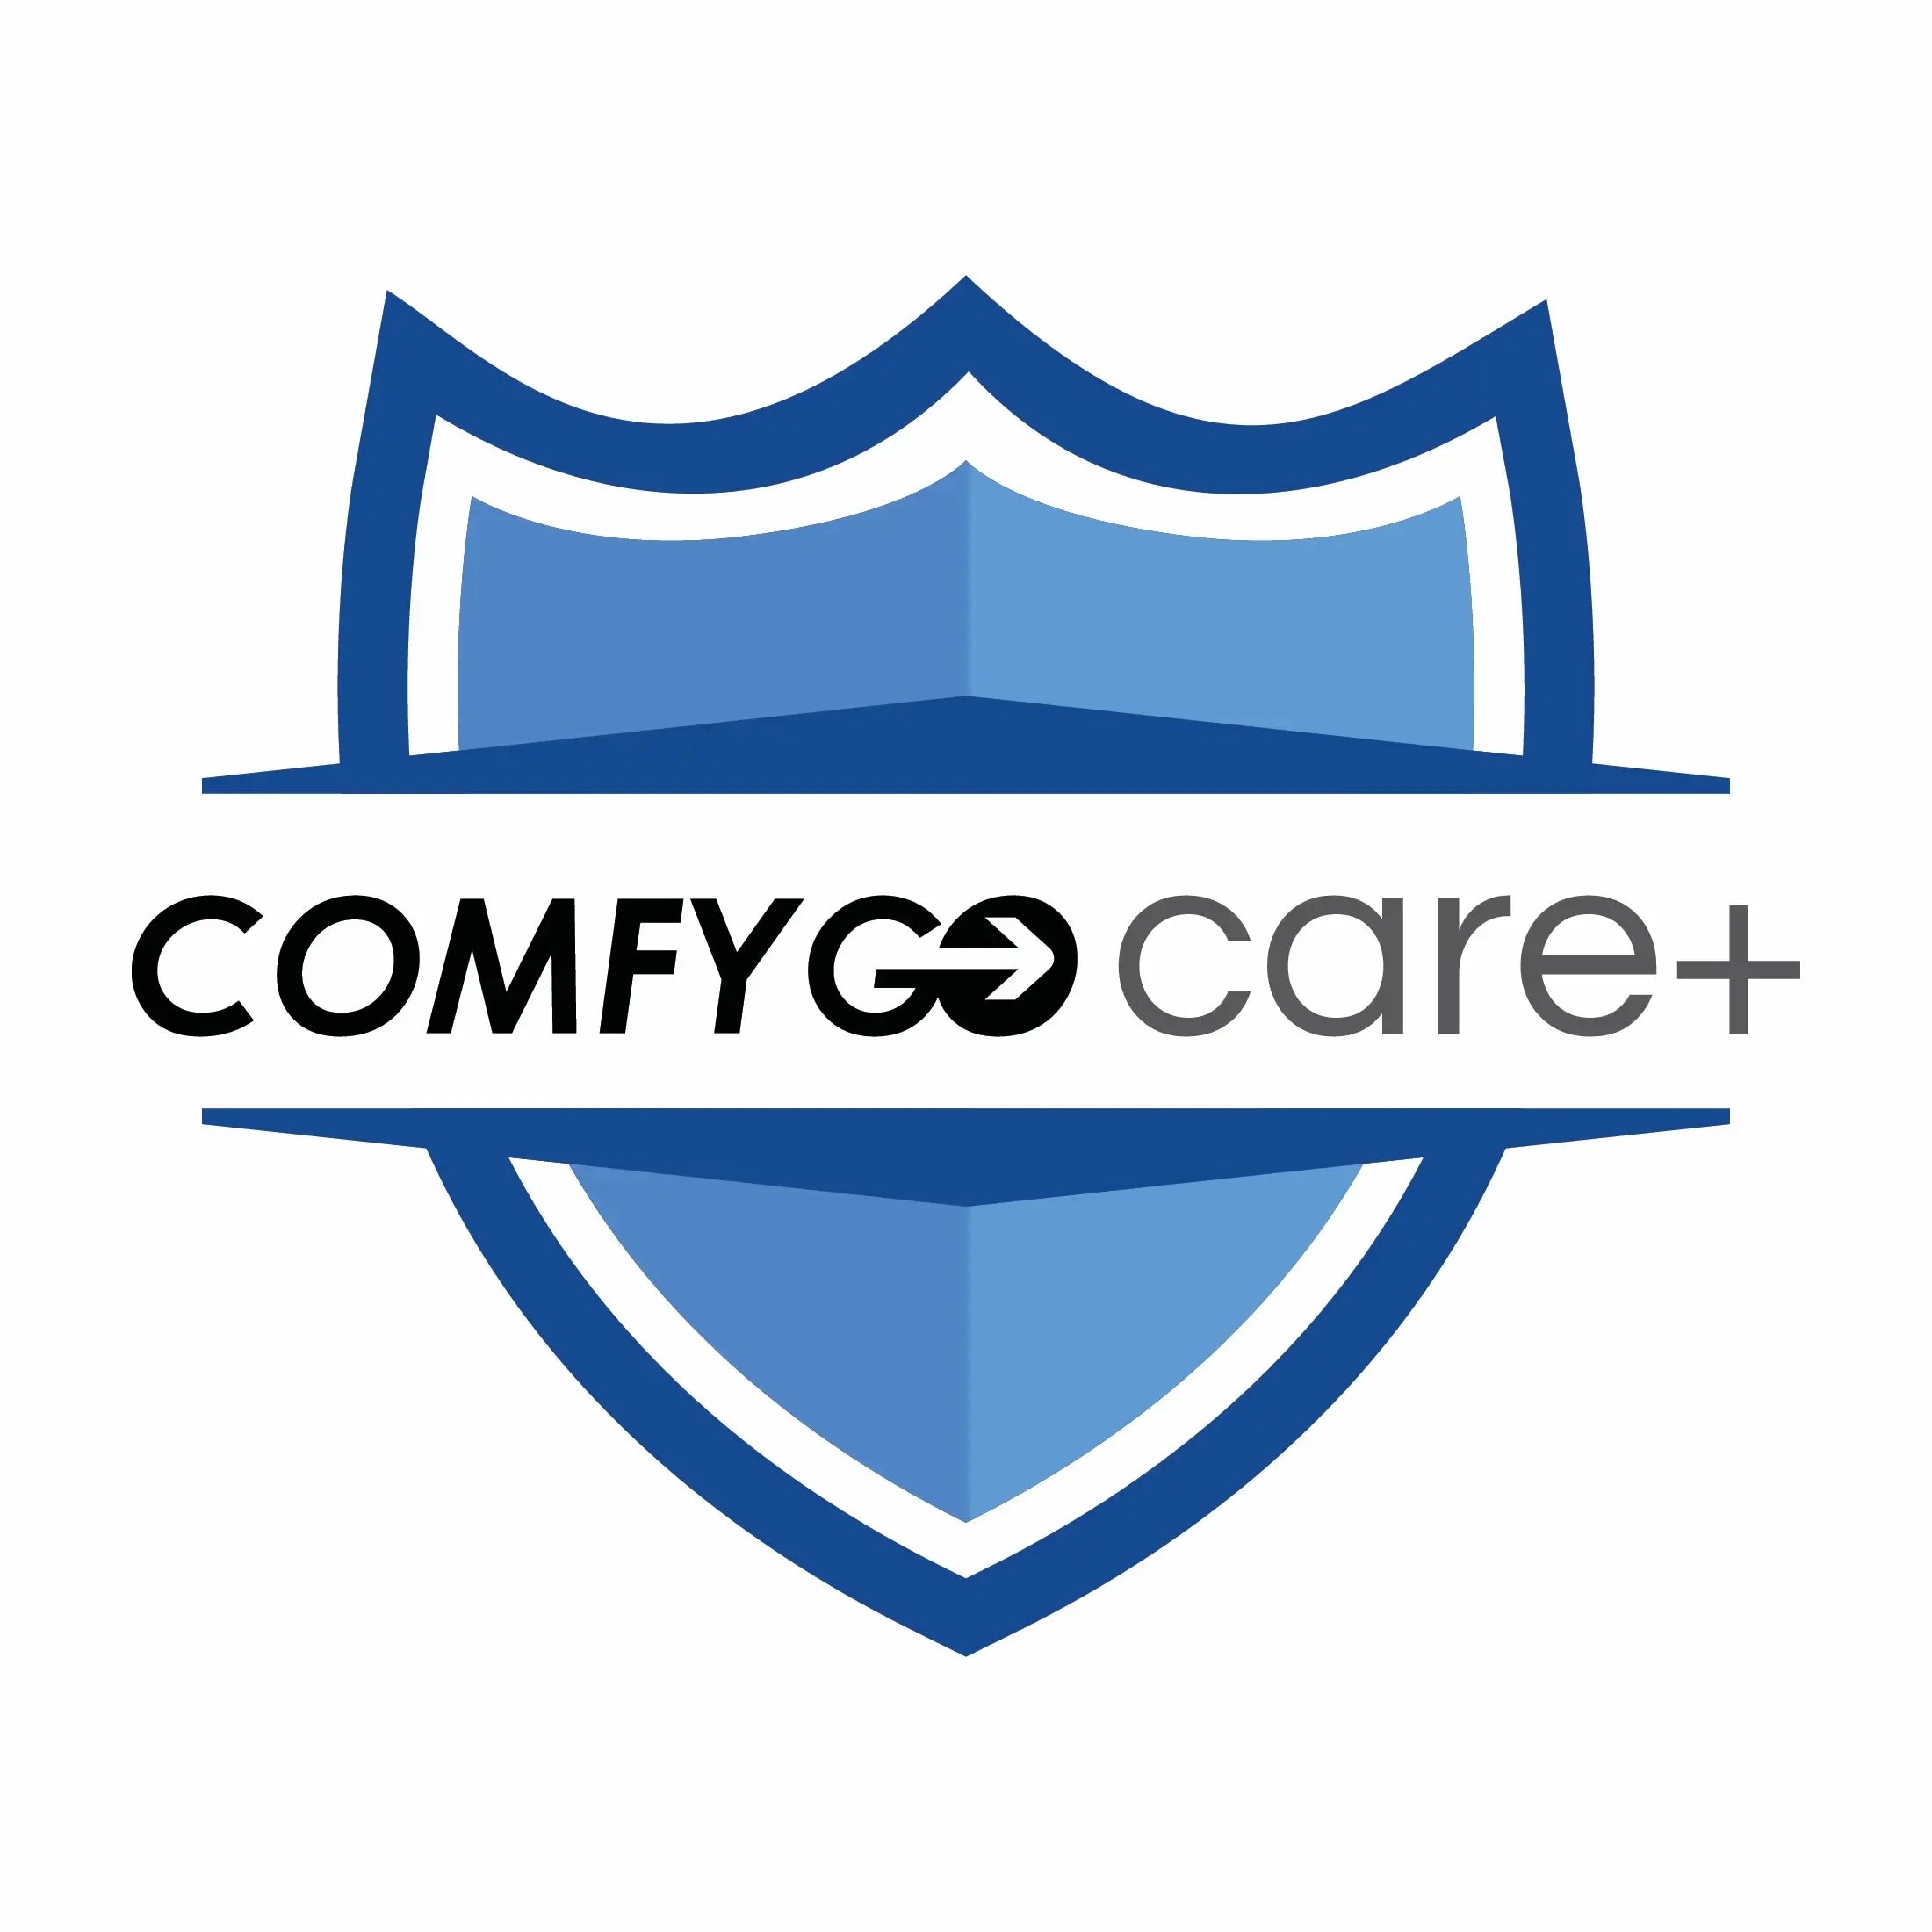 ComfyGO Care+ Protection Plans